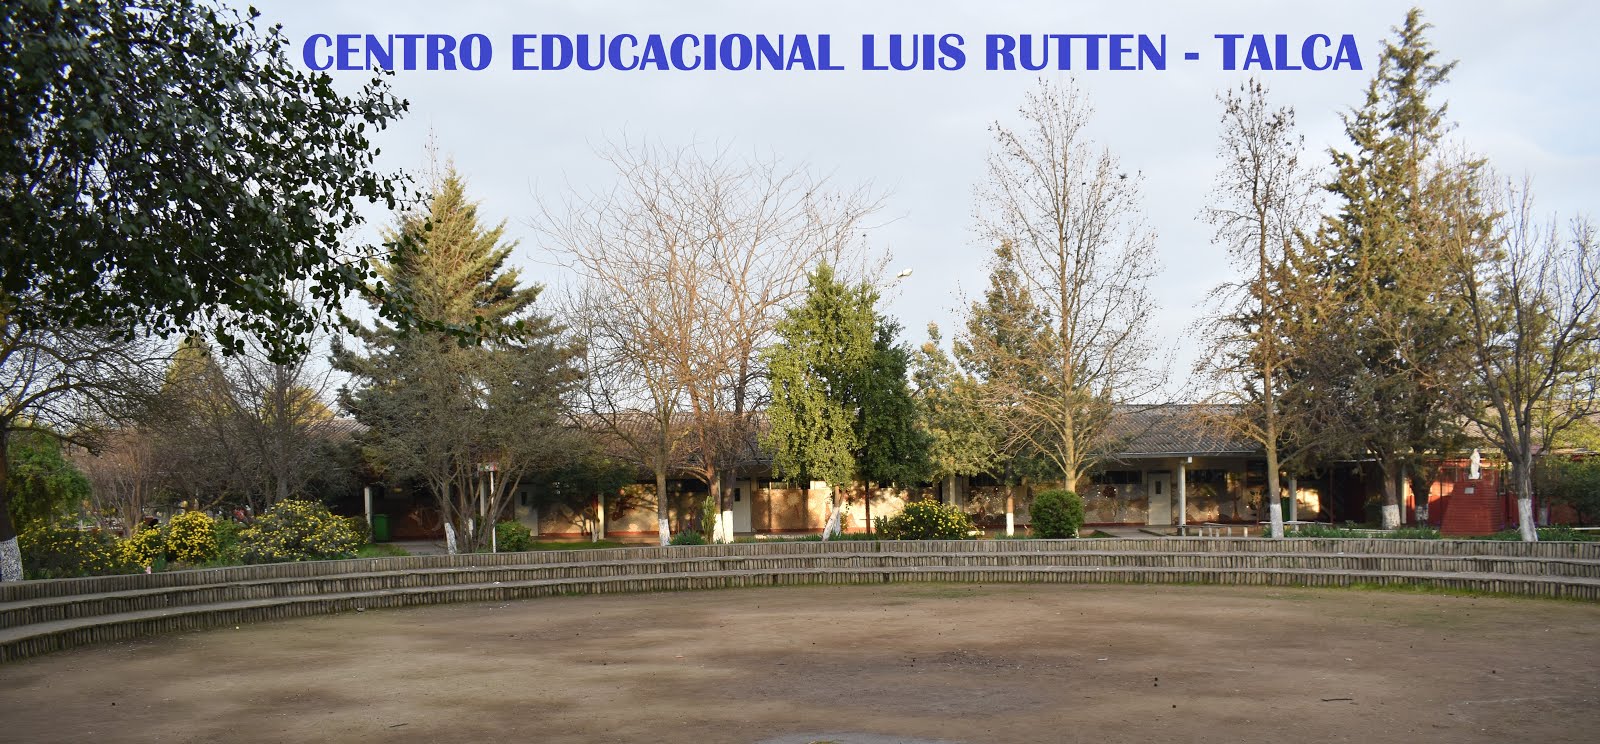 CENTRO EDUCACIONAL LUIS RUTTEN - TALCA